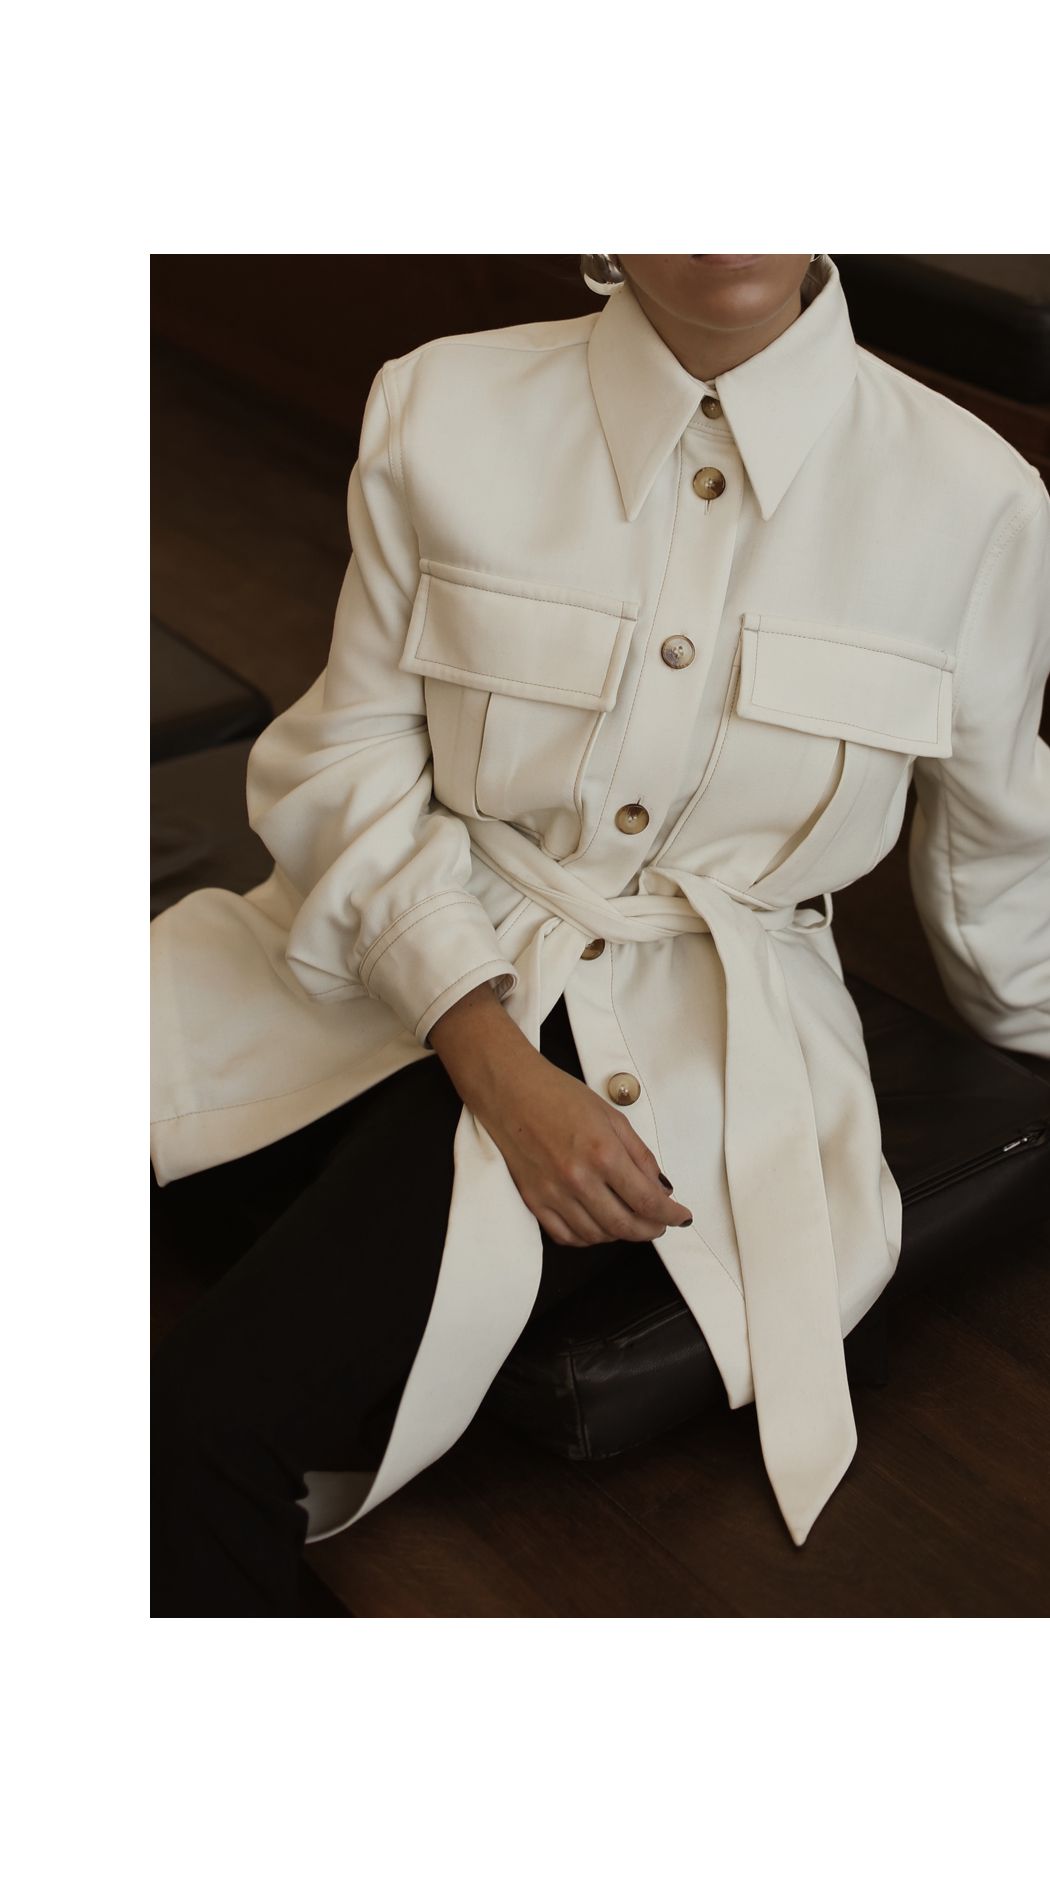 In Fashion | Autumn Style Inspiration: The Utility Jacket